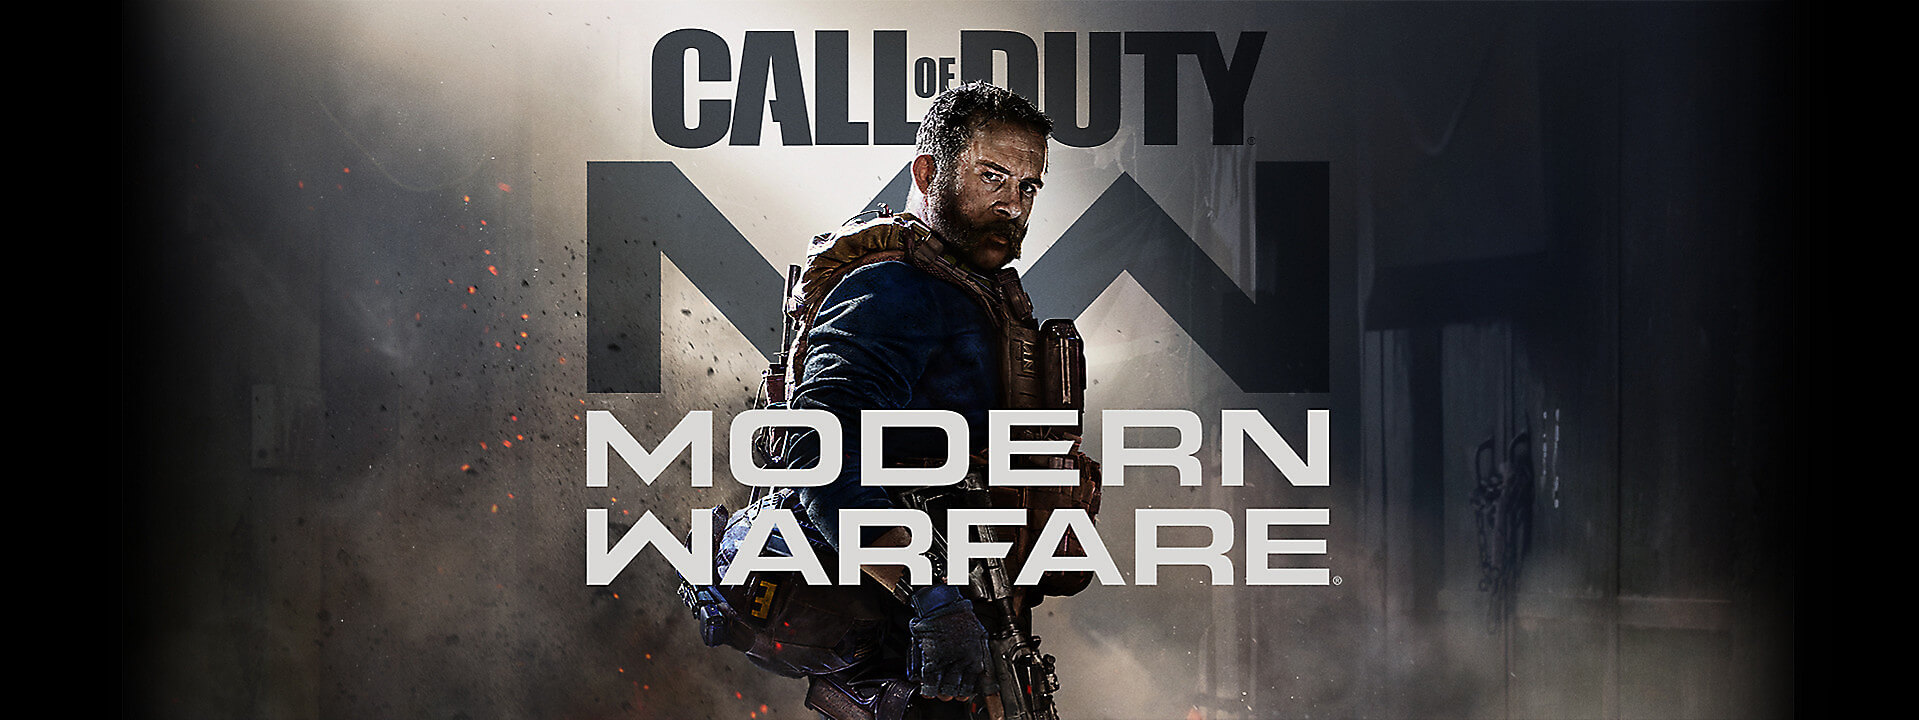 Call Of Duty Modern Warfare Hero Banner 03 Ps4 Us 30may19 